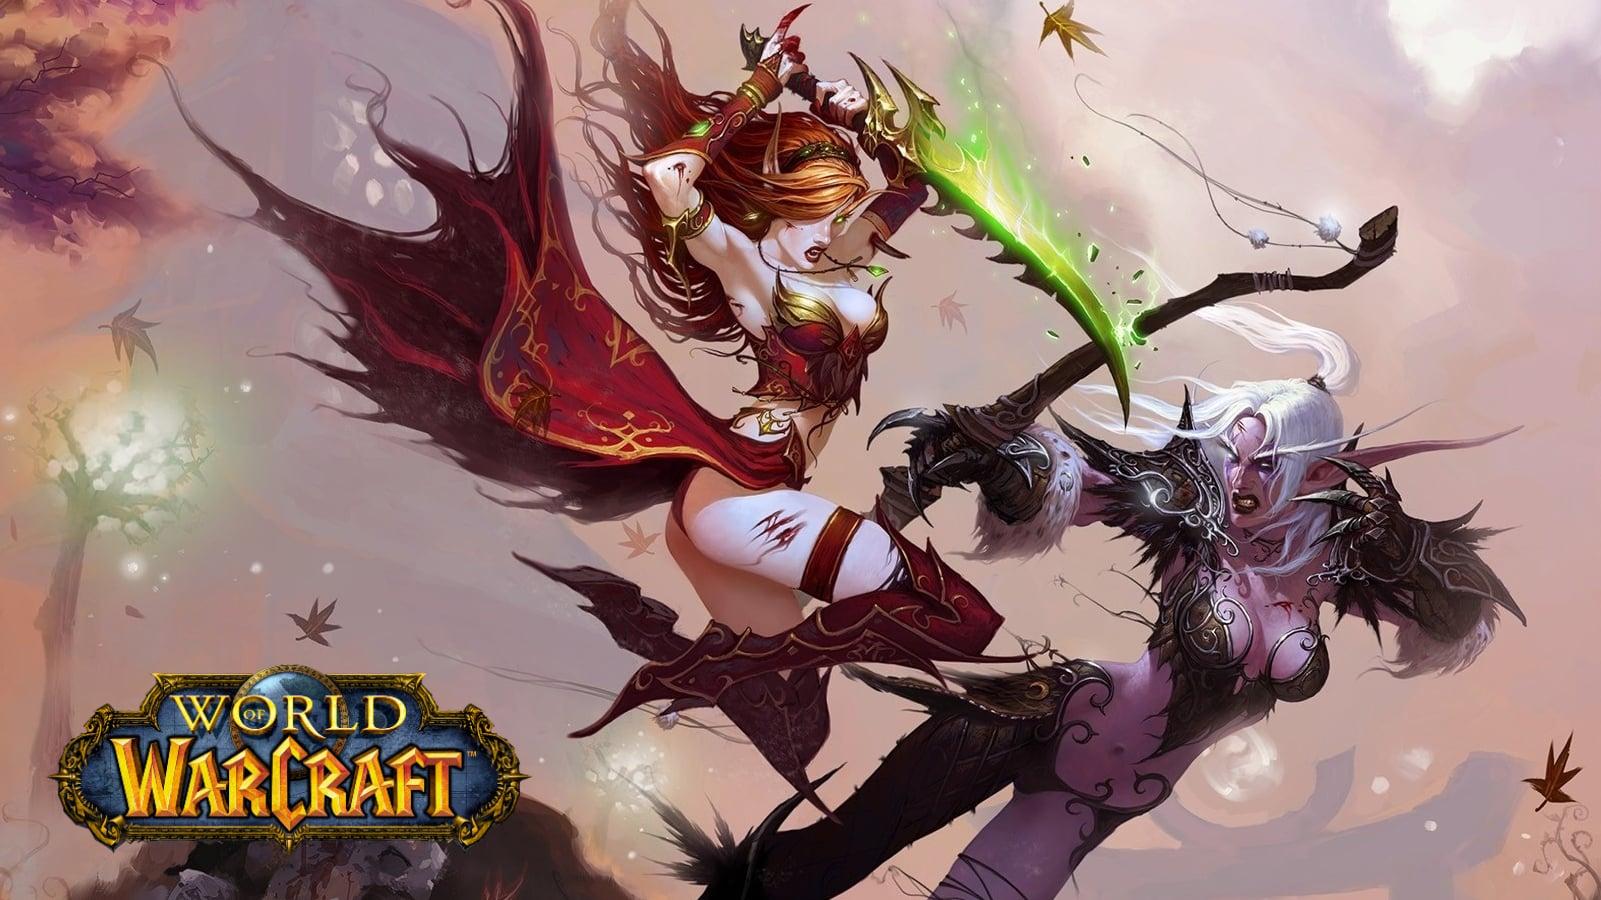 World of Warcraft WoW Burning Crusade Valeera trying to kill Tyrande